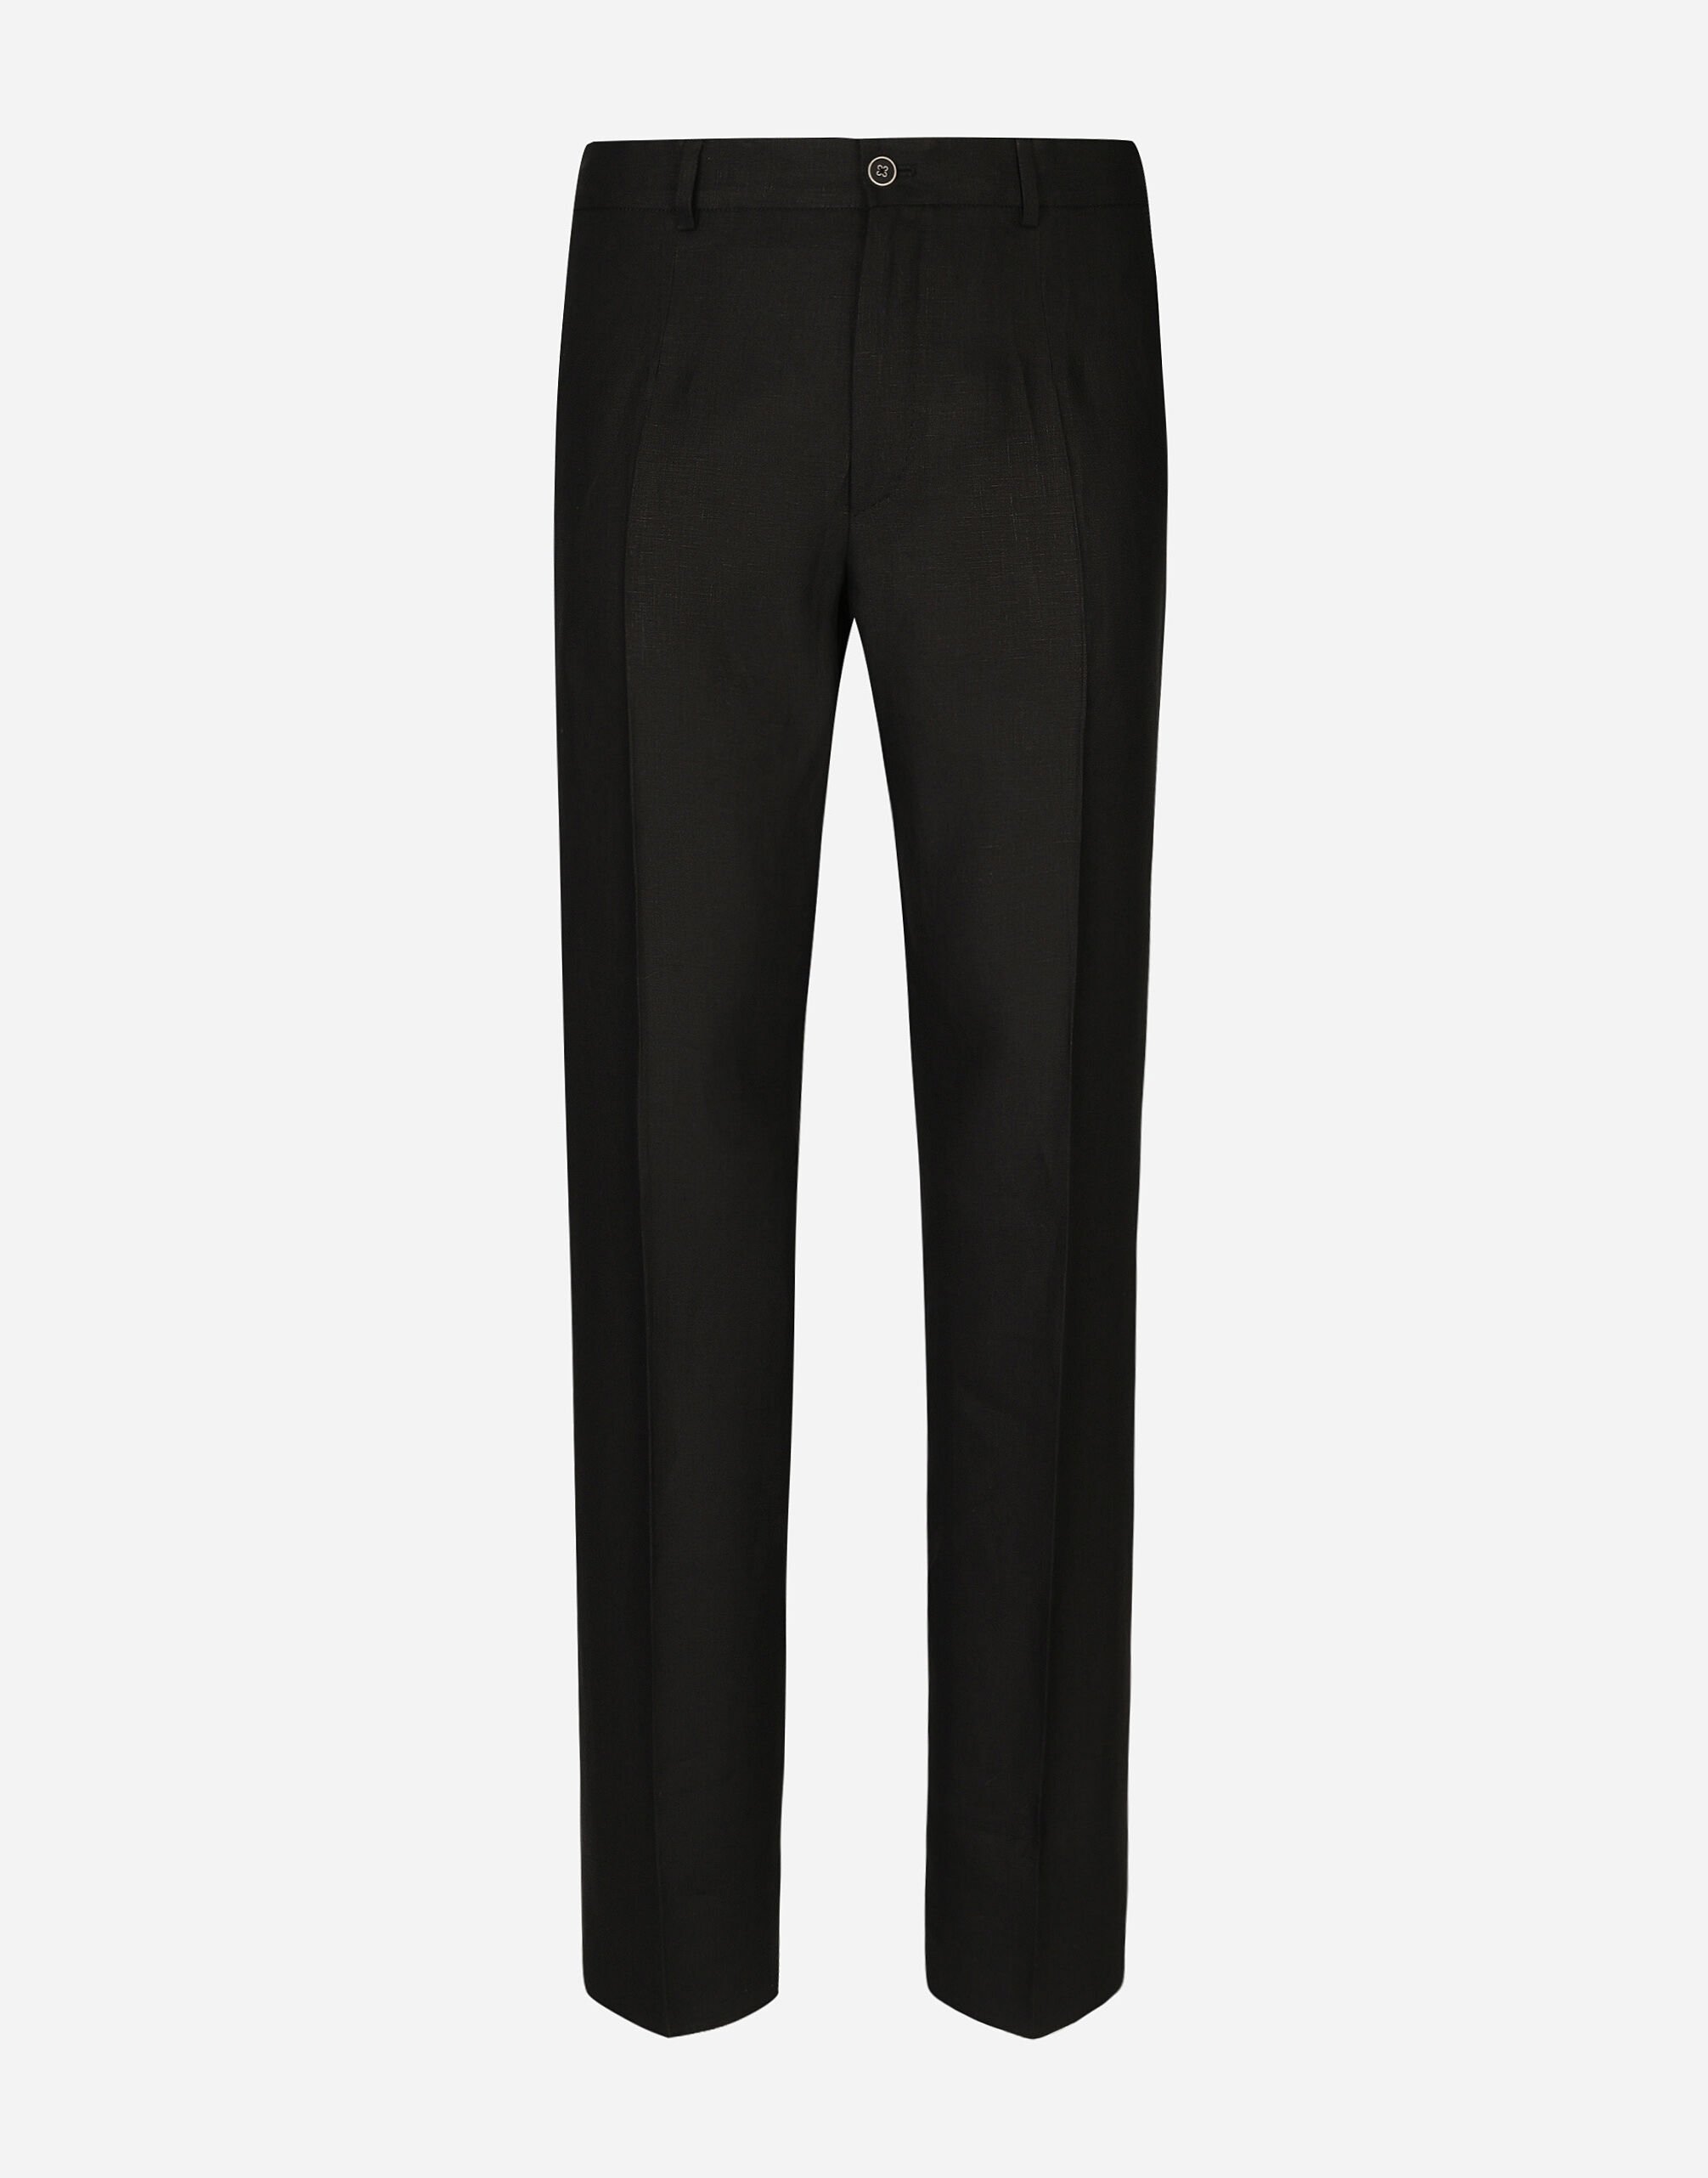 Dolce & Gabbana Tailored stretch cotton pants Black GXS28TJDMS9